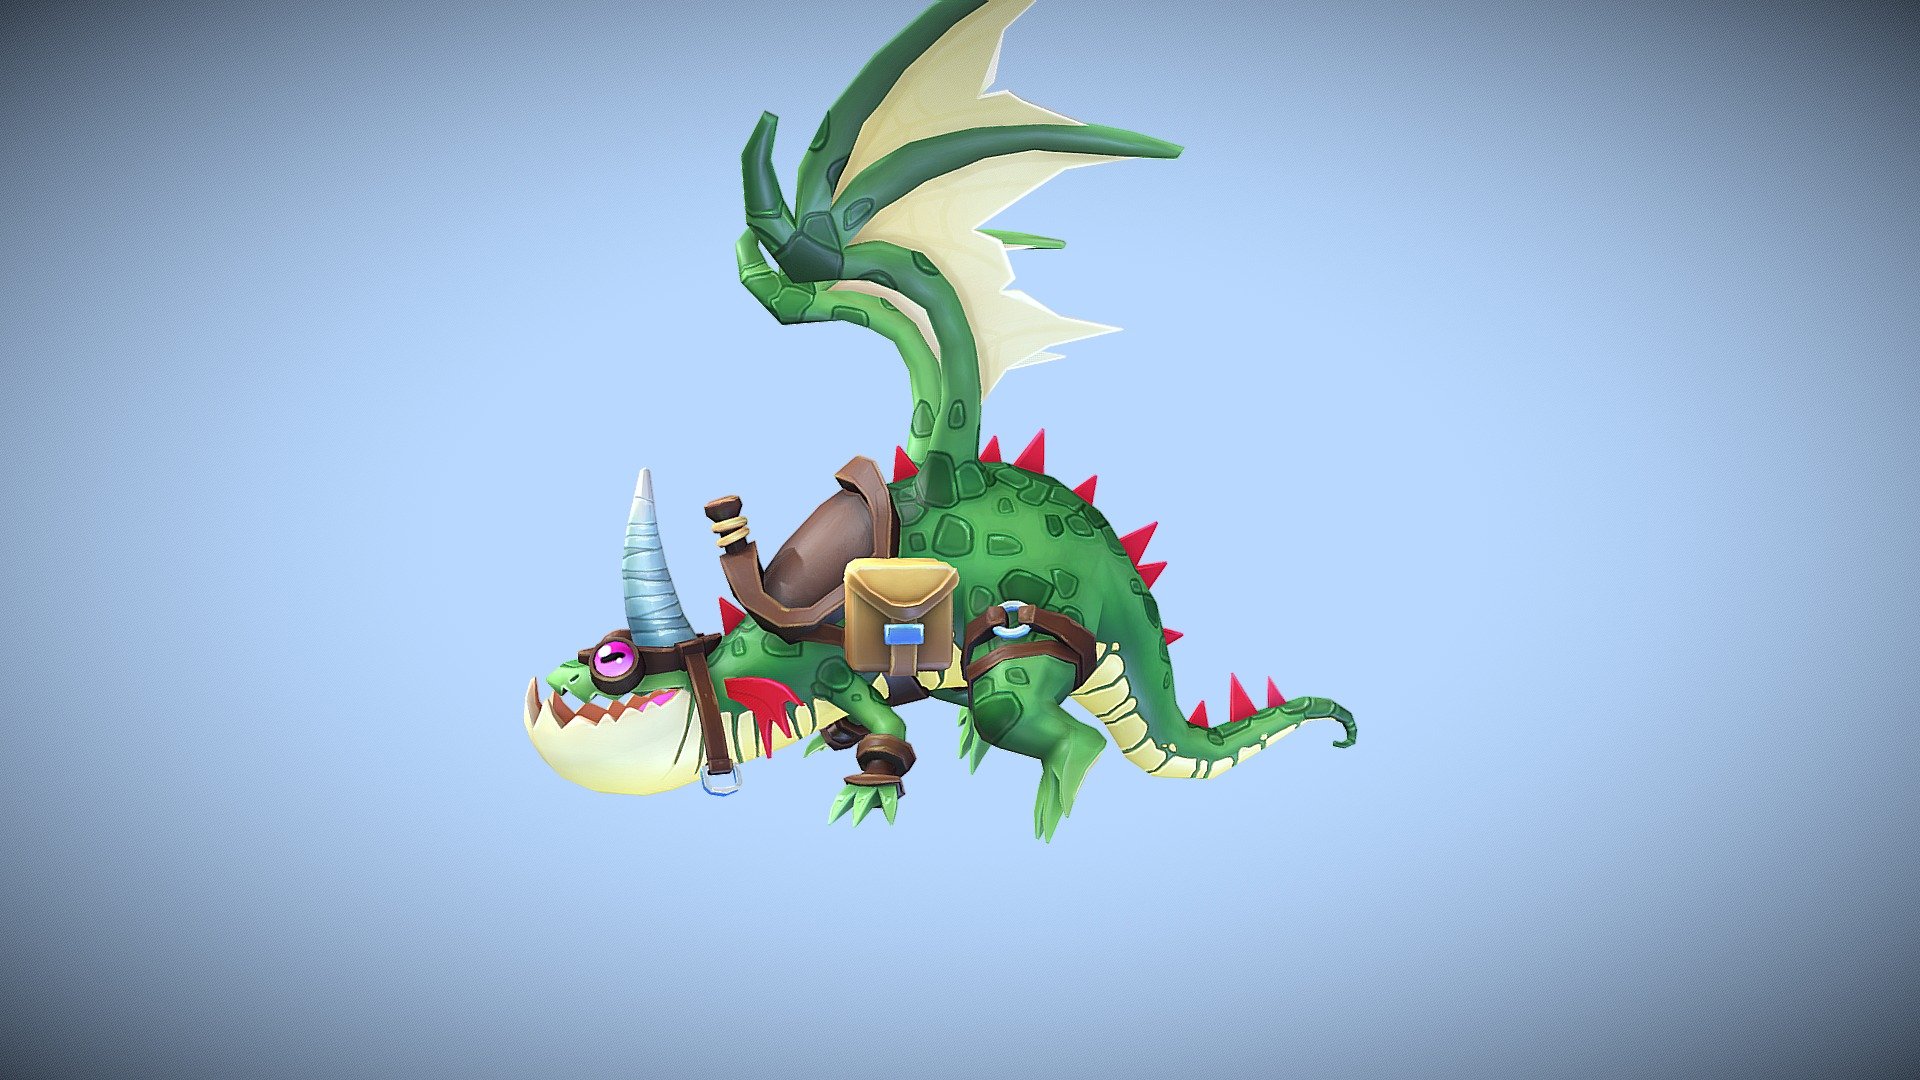 Dragon_mount - 3D model by Captain LowPoly (@captainlowpoly) 3d model